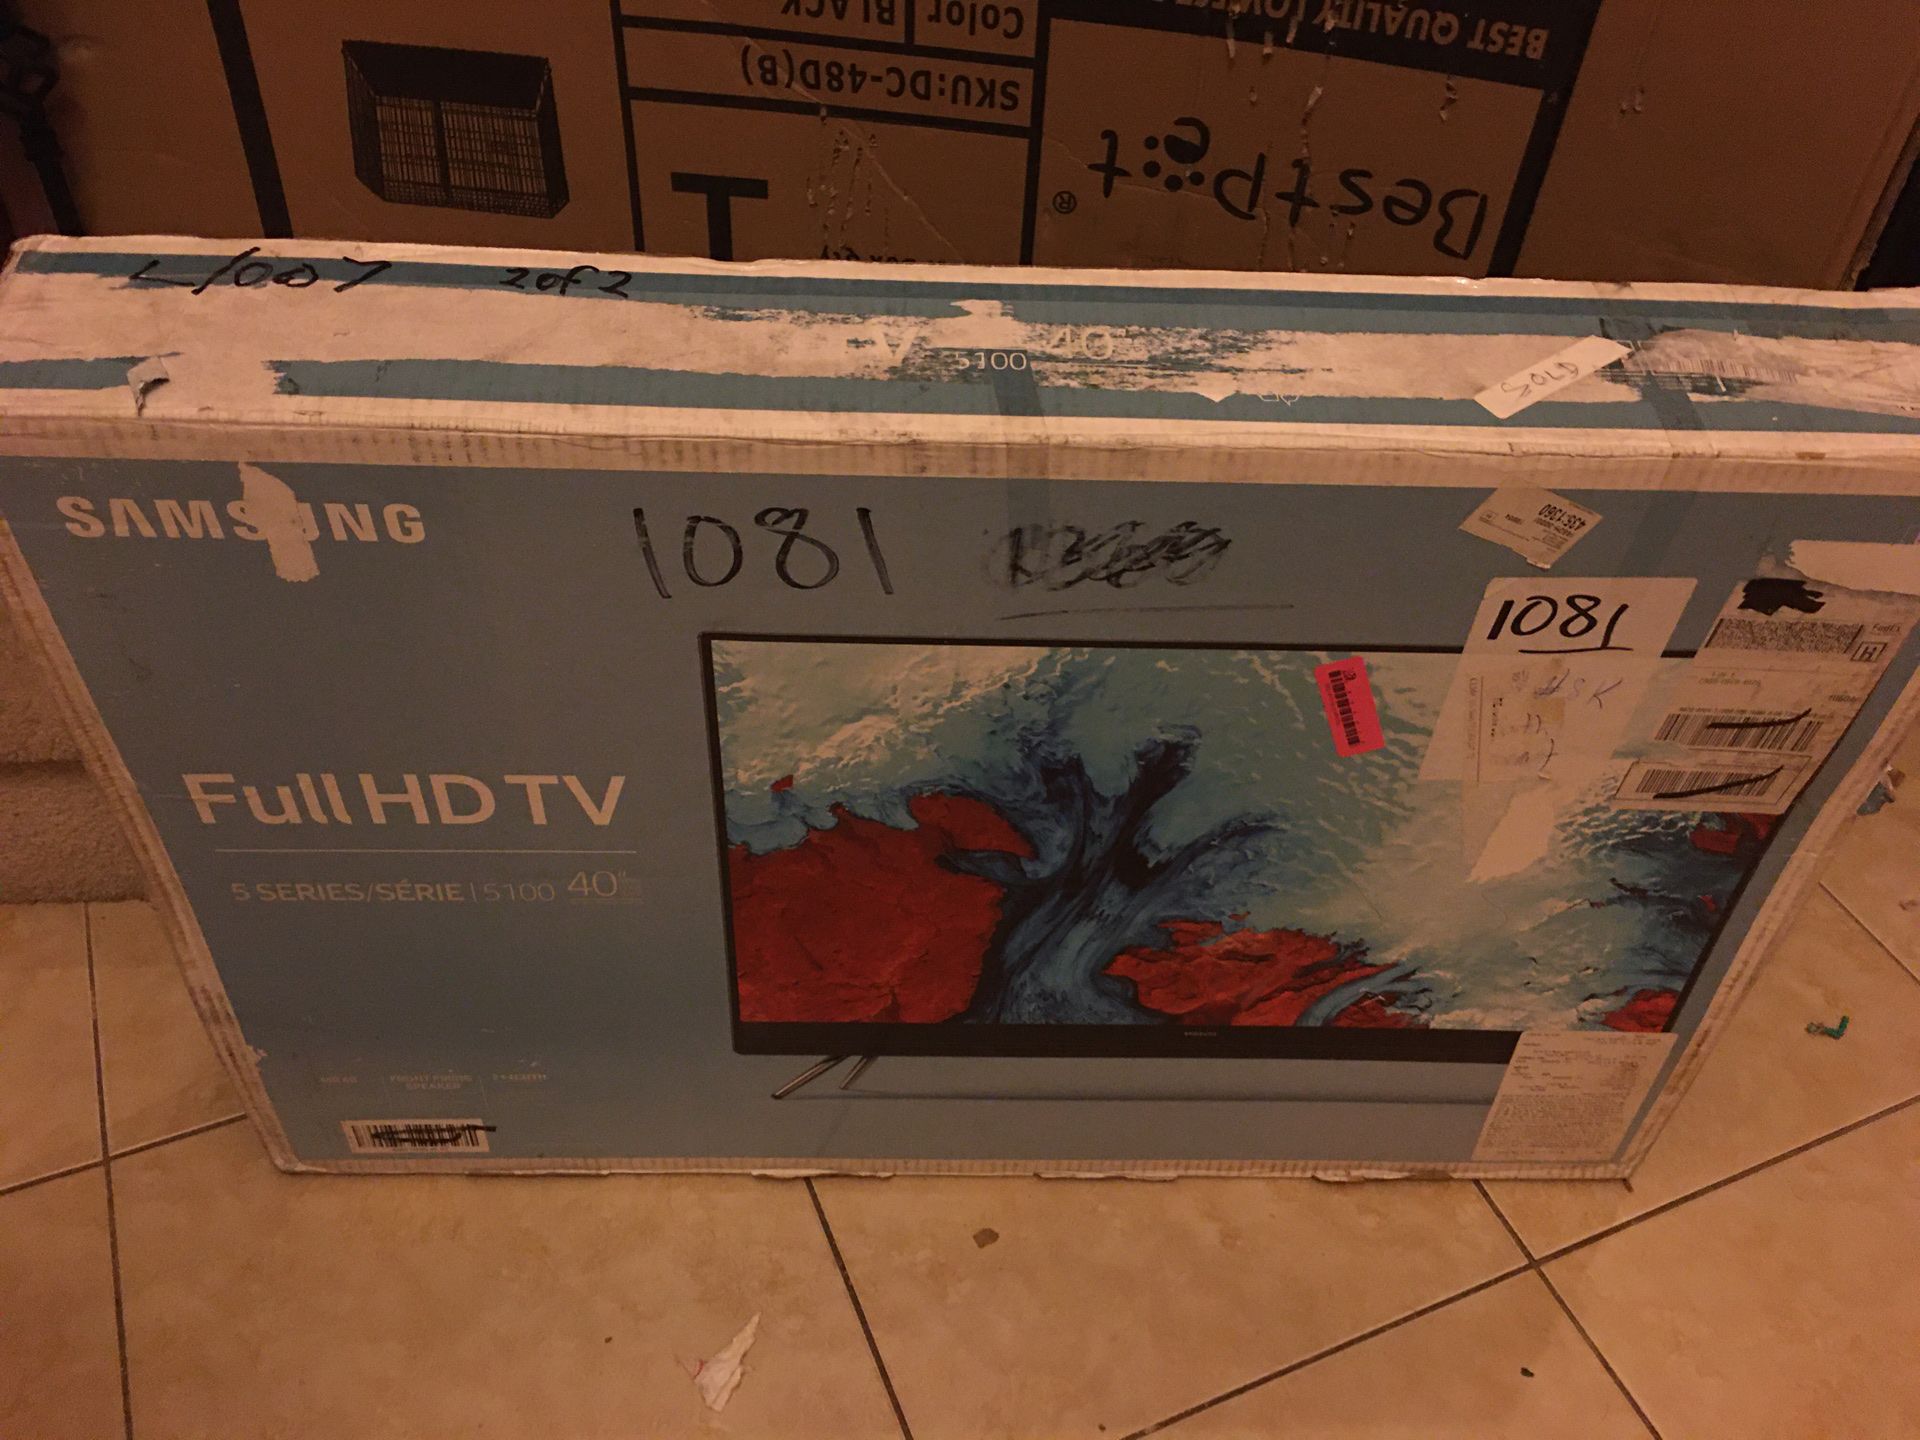 Brand new in box Samsung full HD TV 40 “